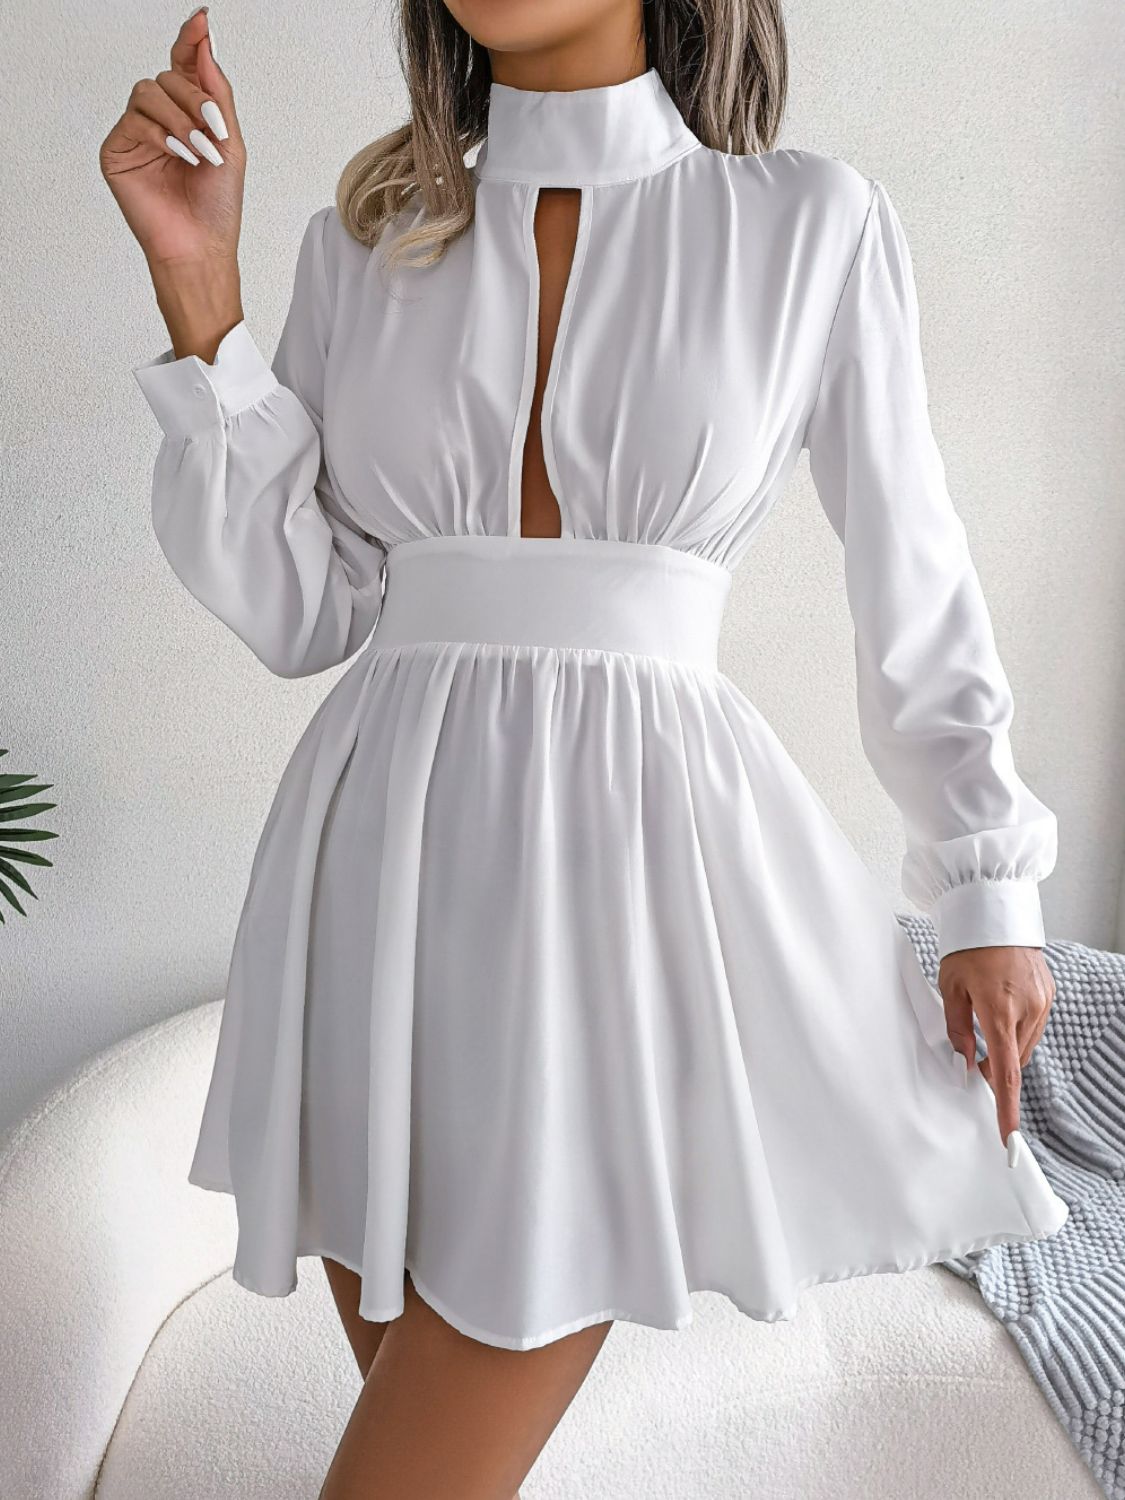 Cutout Turtleneck A-Line Mini Dress - White Stag Clothing